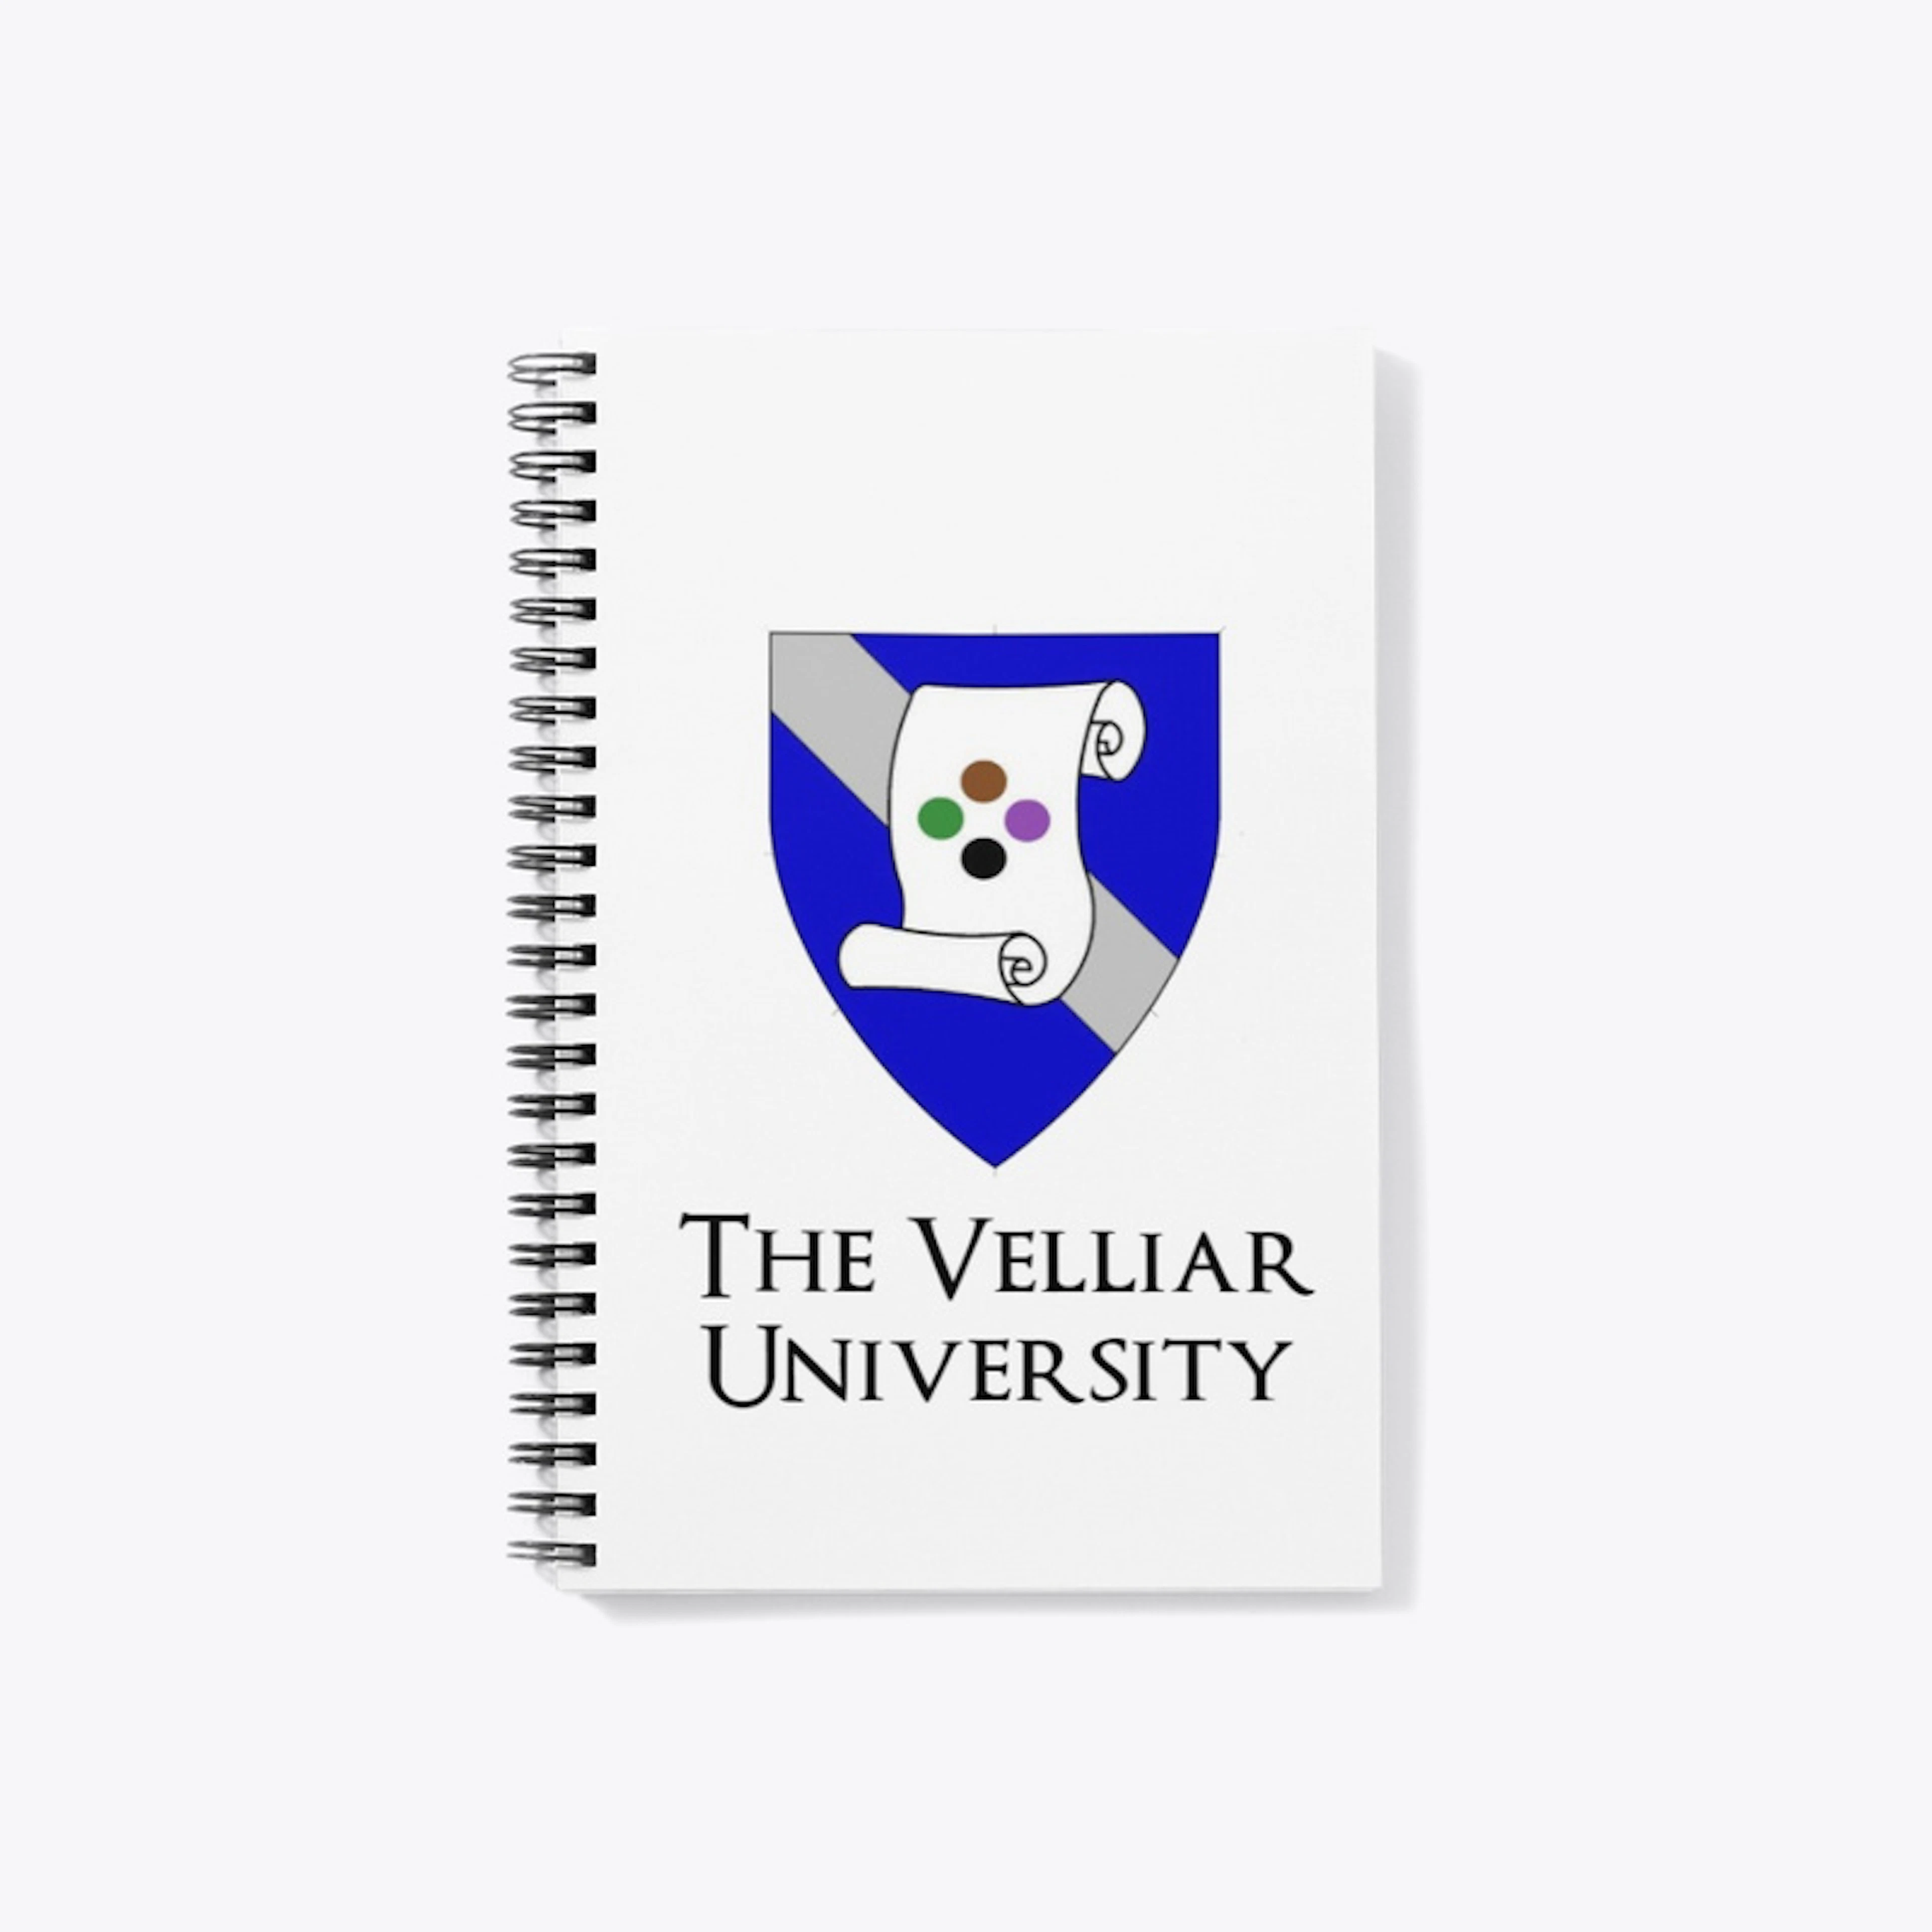 The Velliar University